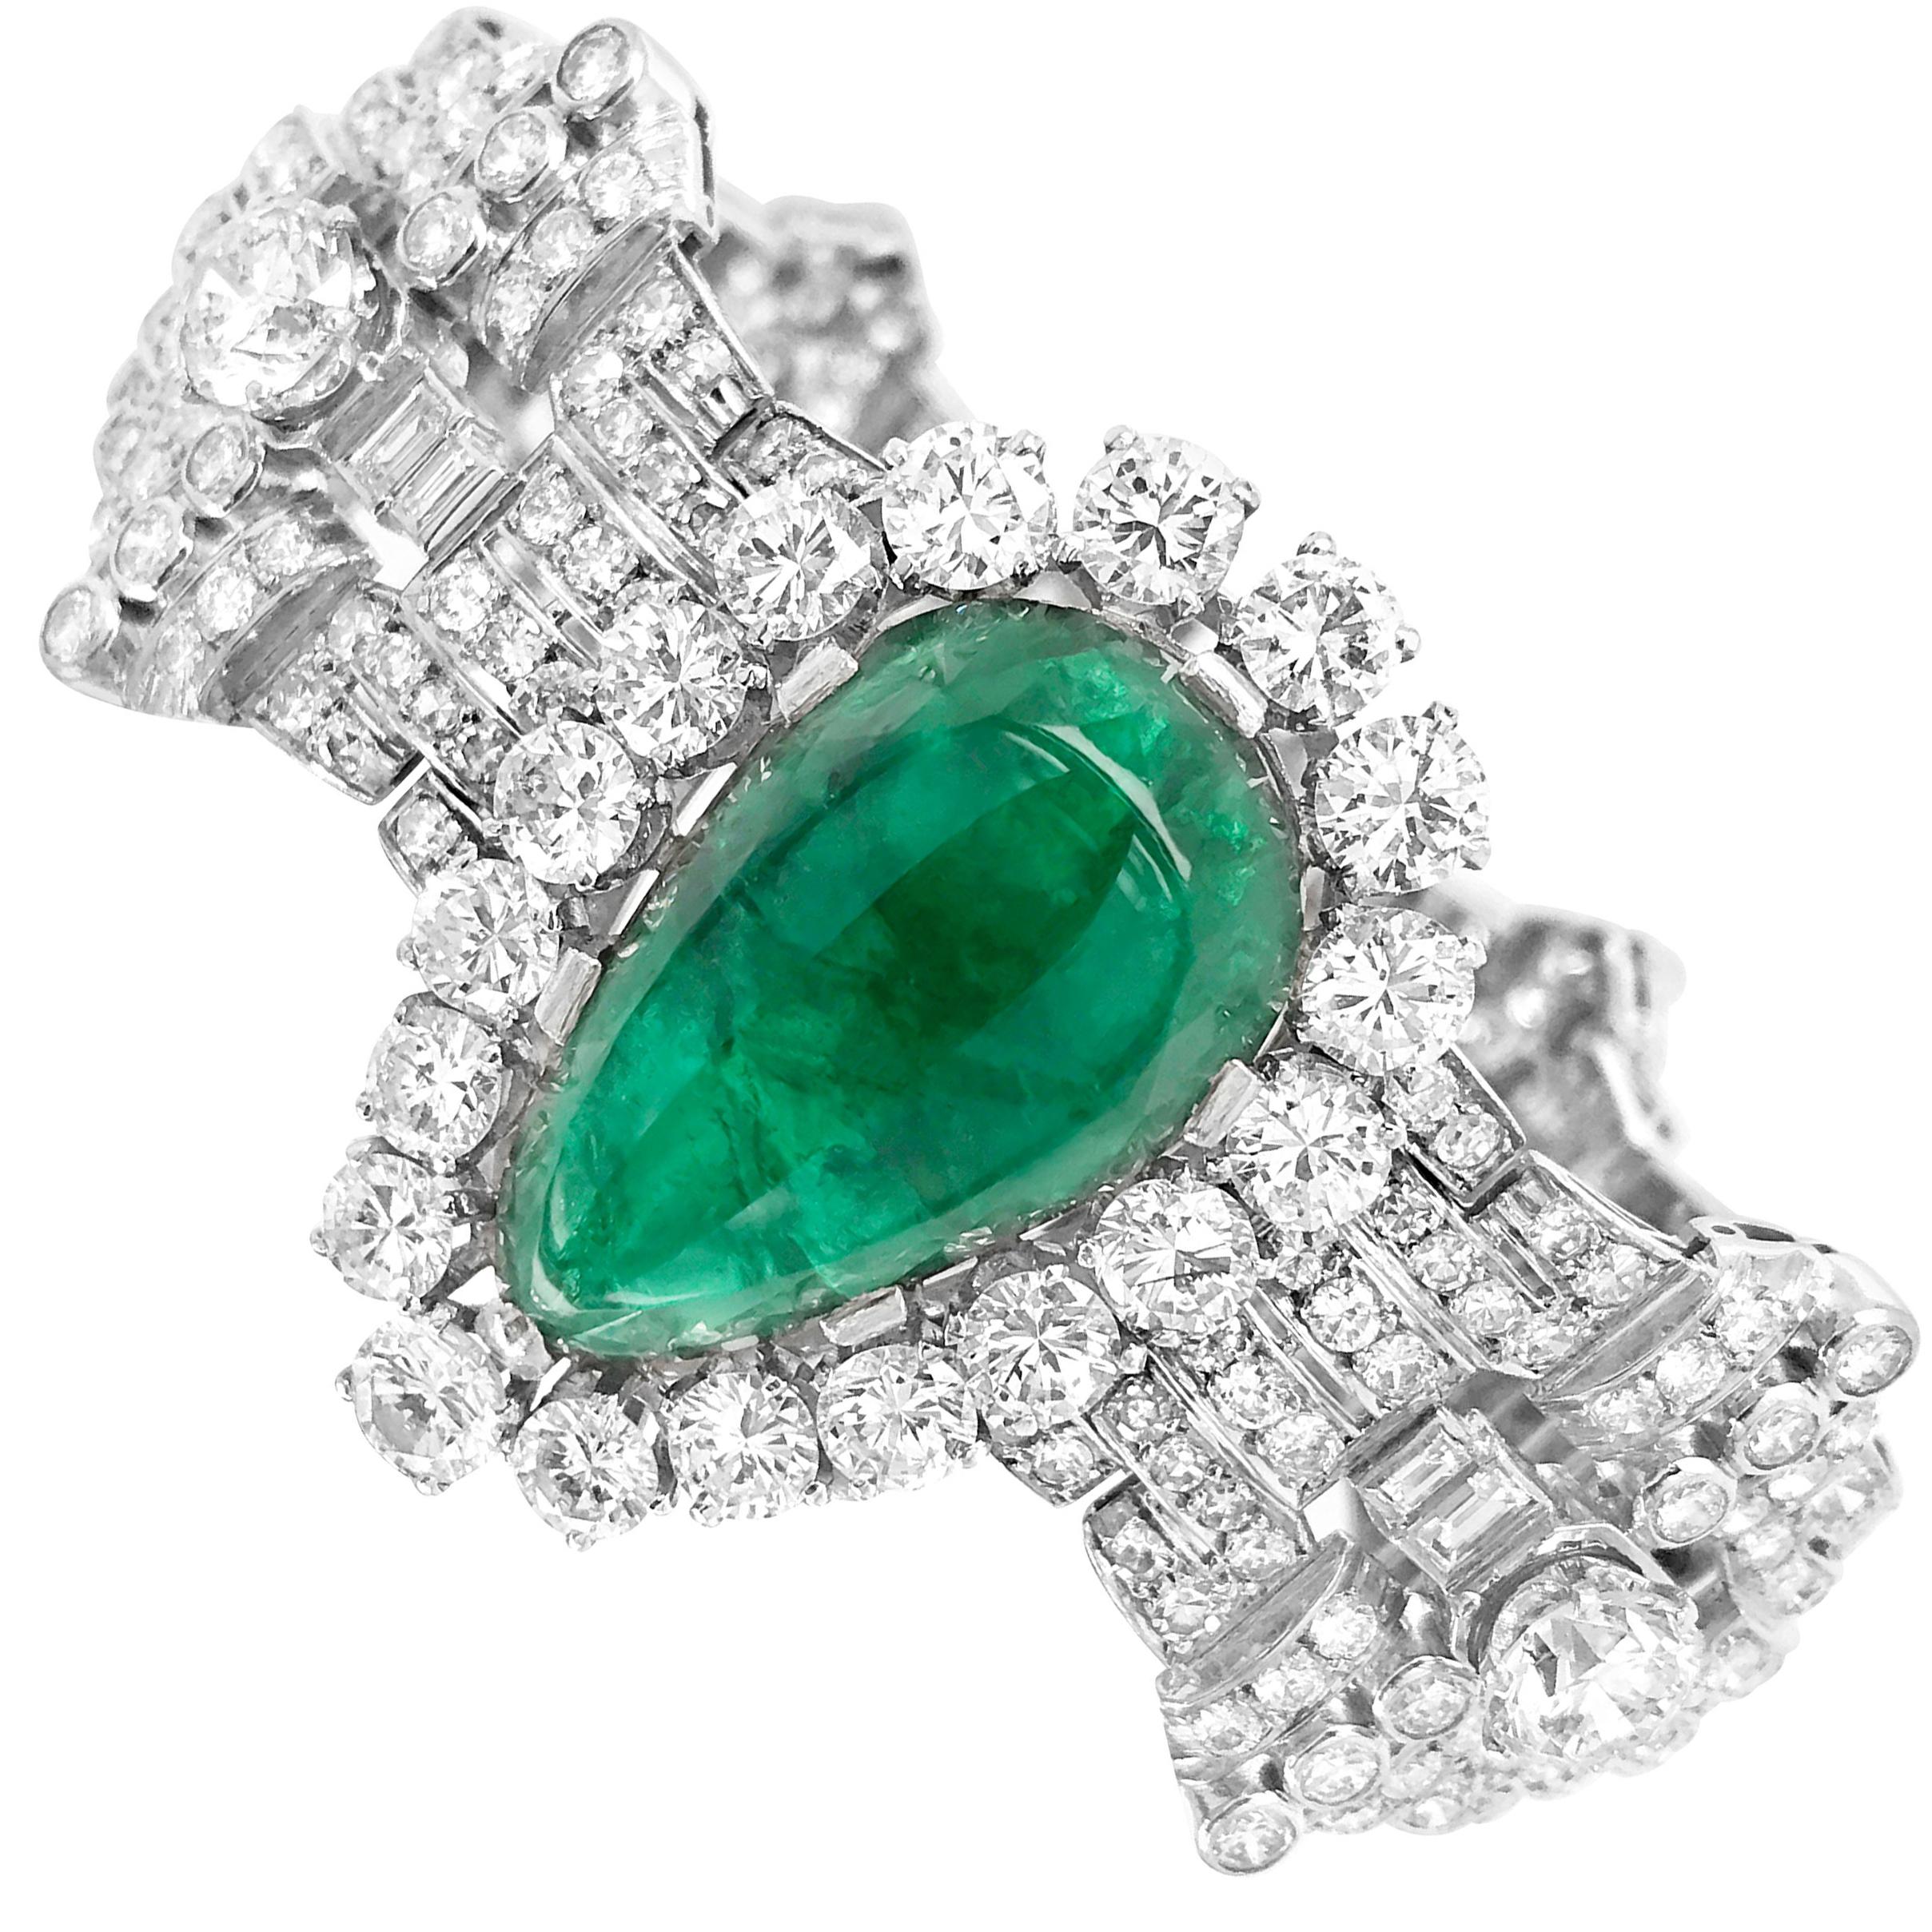 Pear-Shaped 23 Carat Emerald Bracelet, Platinum and Diamond, Clerc